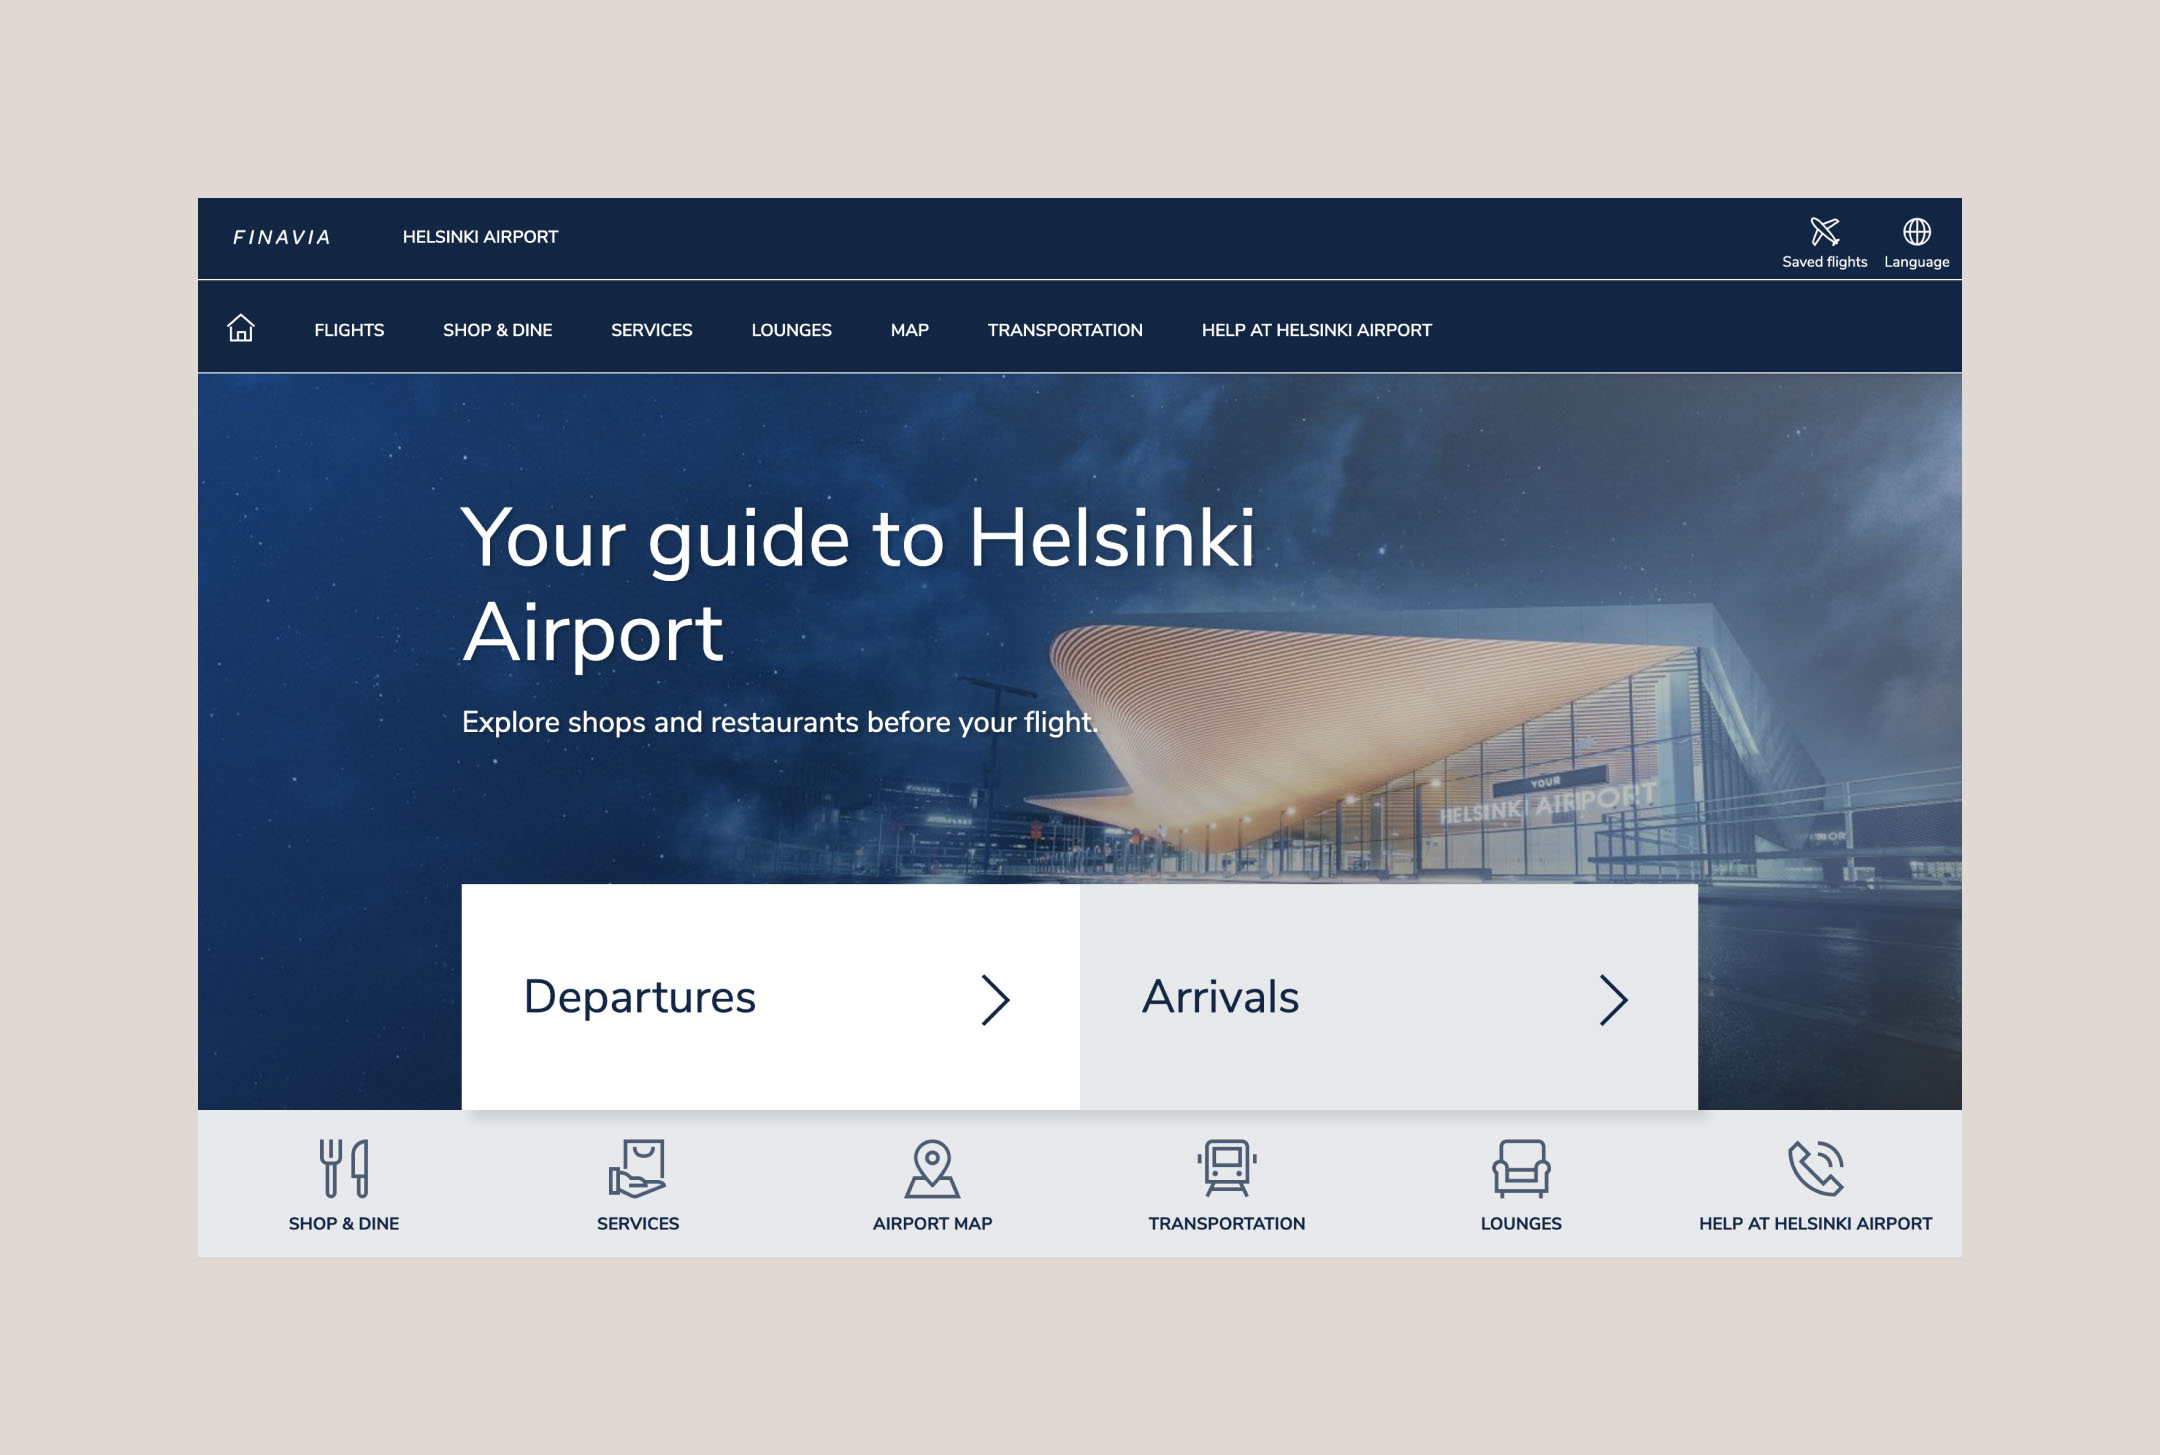 Finavia airport guide desktop